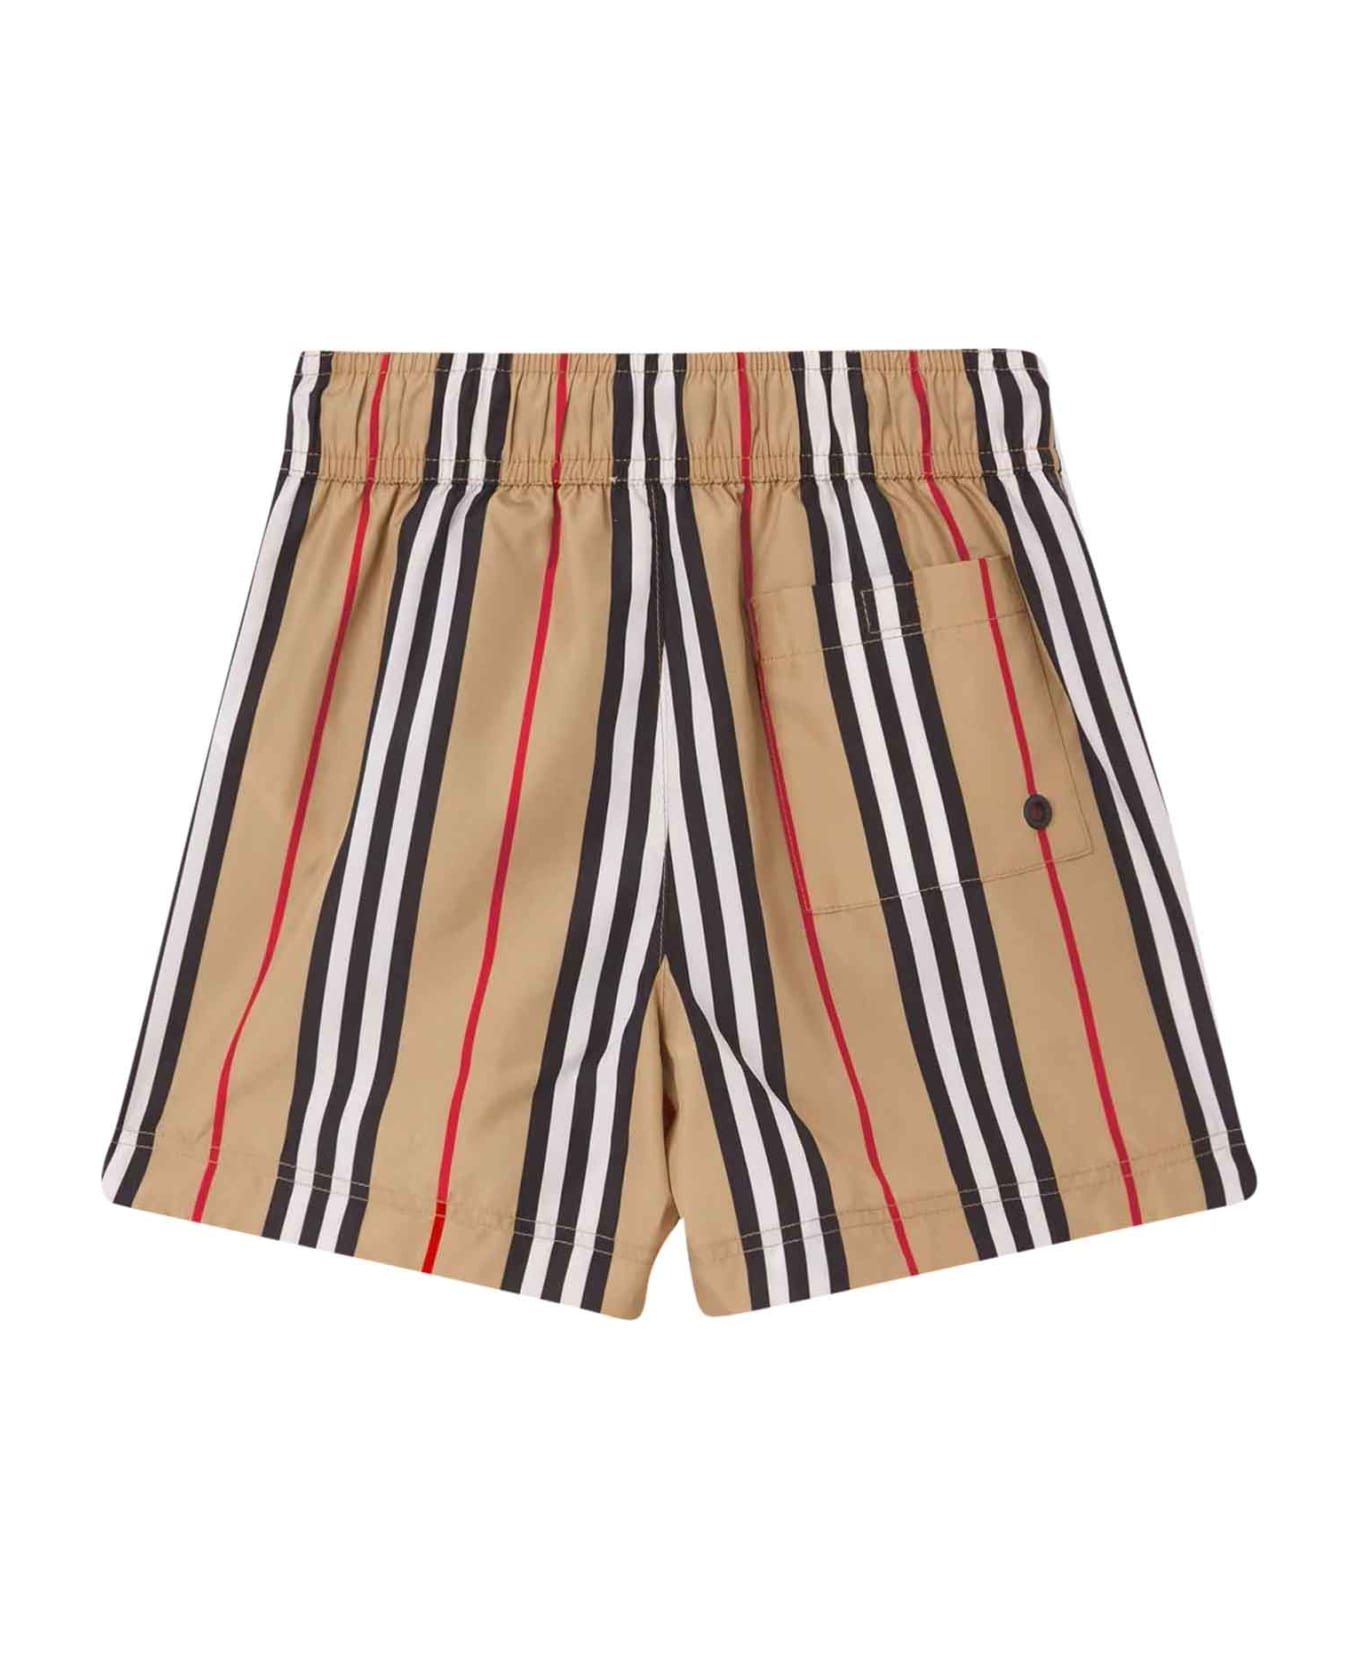 Burberry Striped Swimsuit - Beige